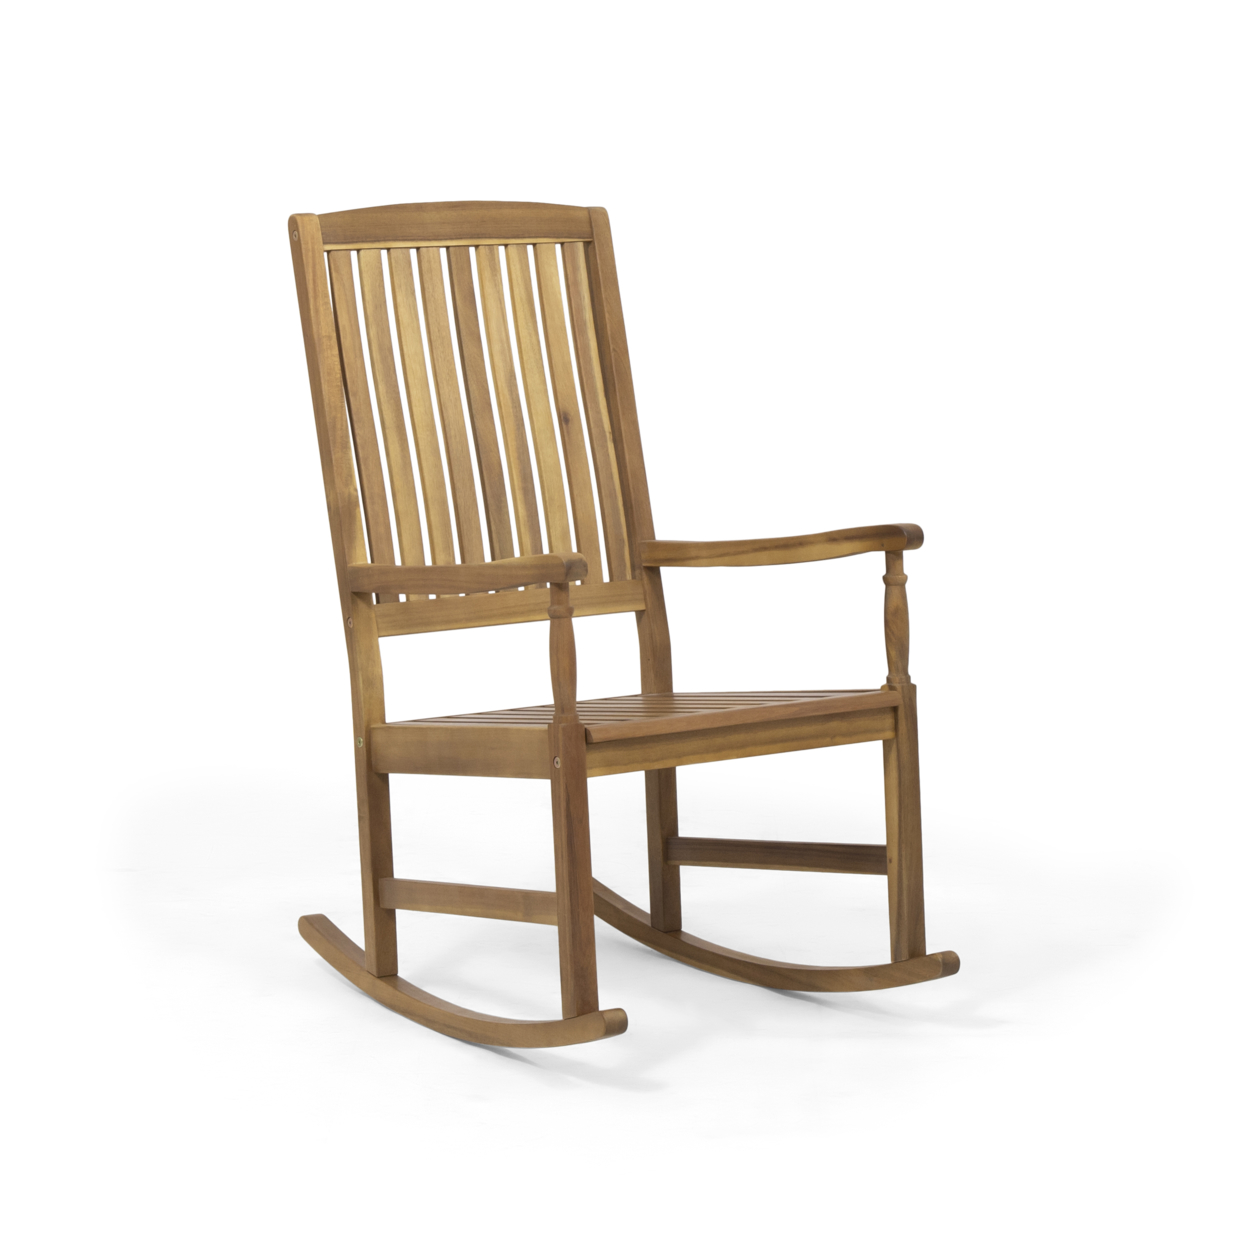 Myrna Outdoor Acacia Wood Rocking Chair - Teak Finish